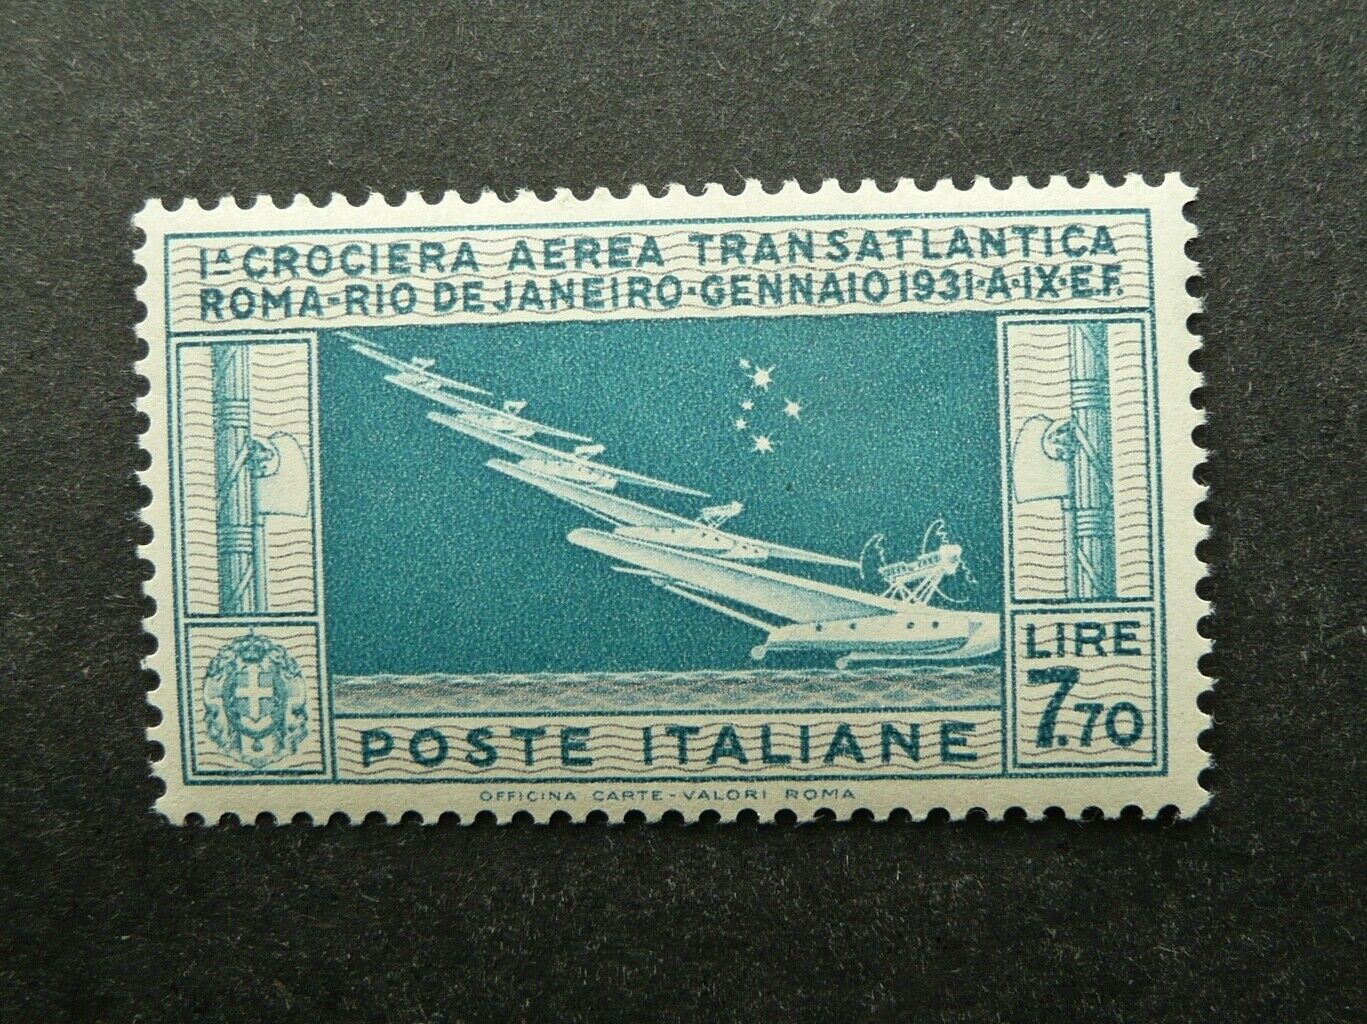 ITALY 1930 TRANSATLANTIC CRUISE BALBO 770L BLUE AIRMAIL STAMP  MNH